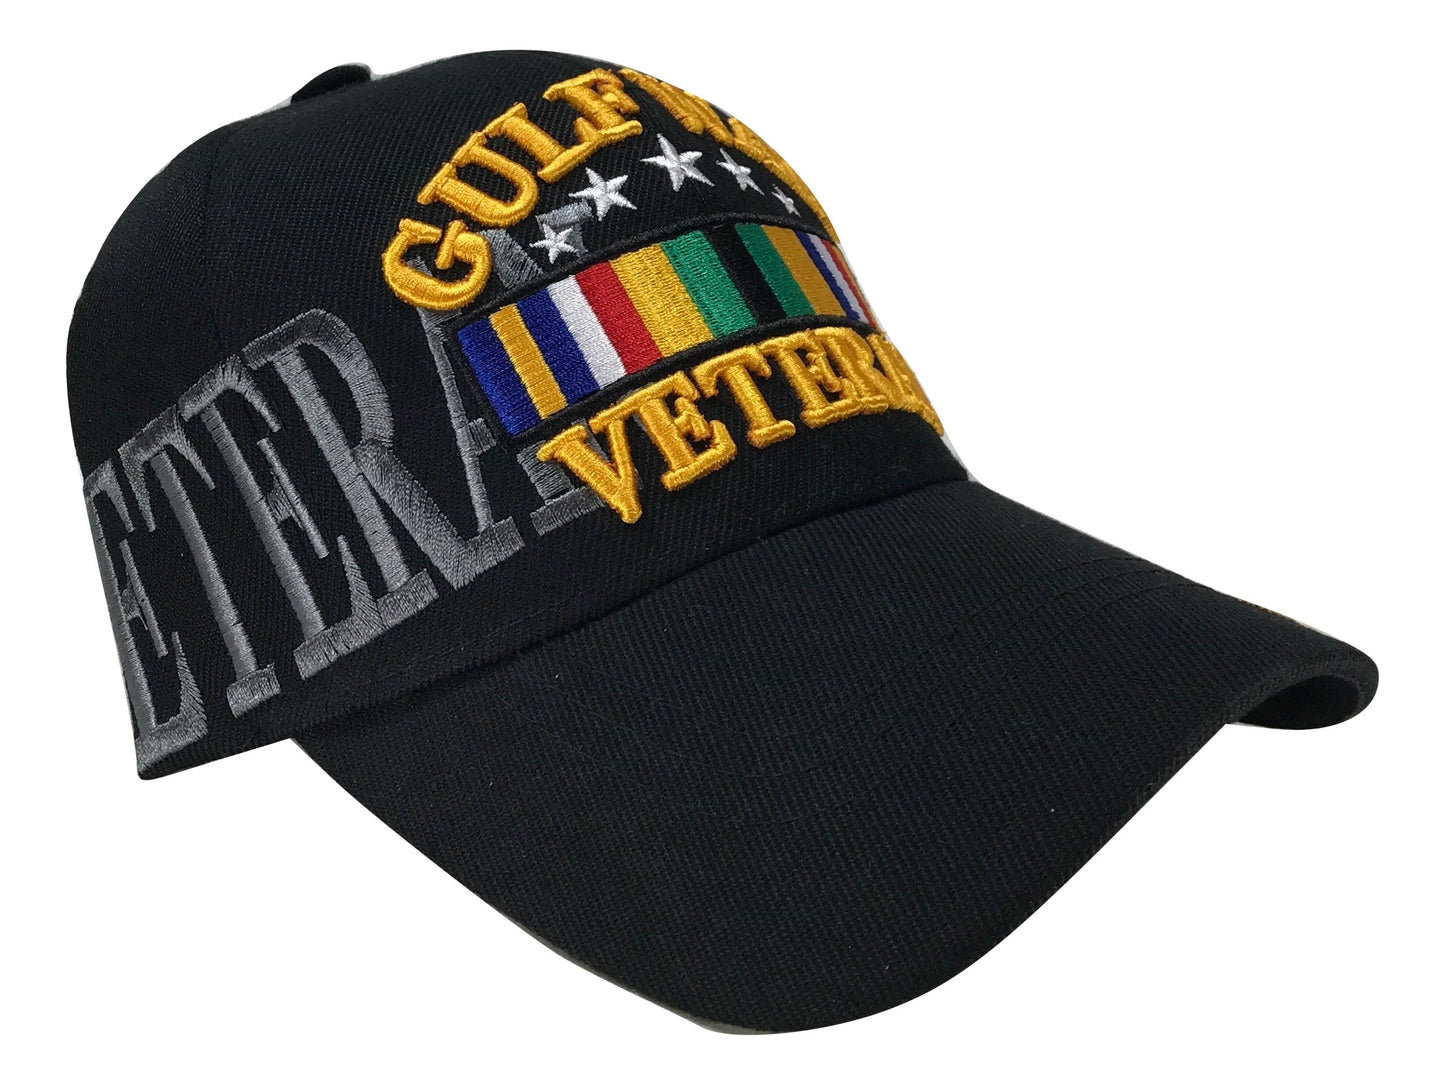 Gulf War Veteran